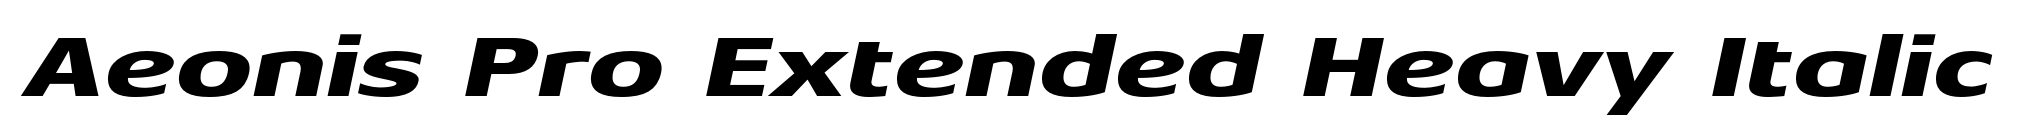 Aeonis Pro Extended Heavy Italic image